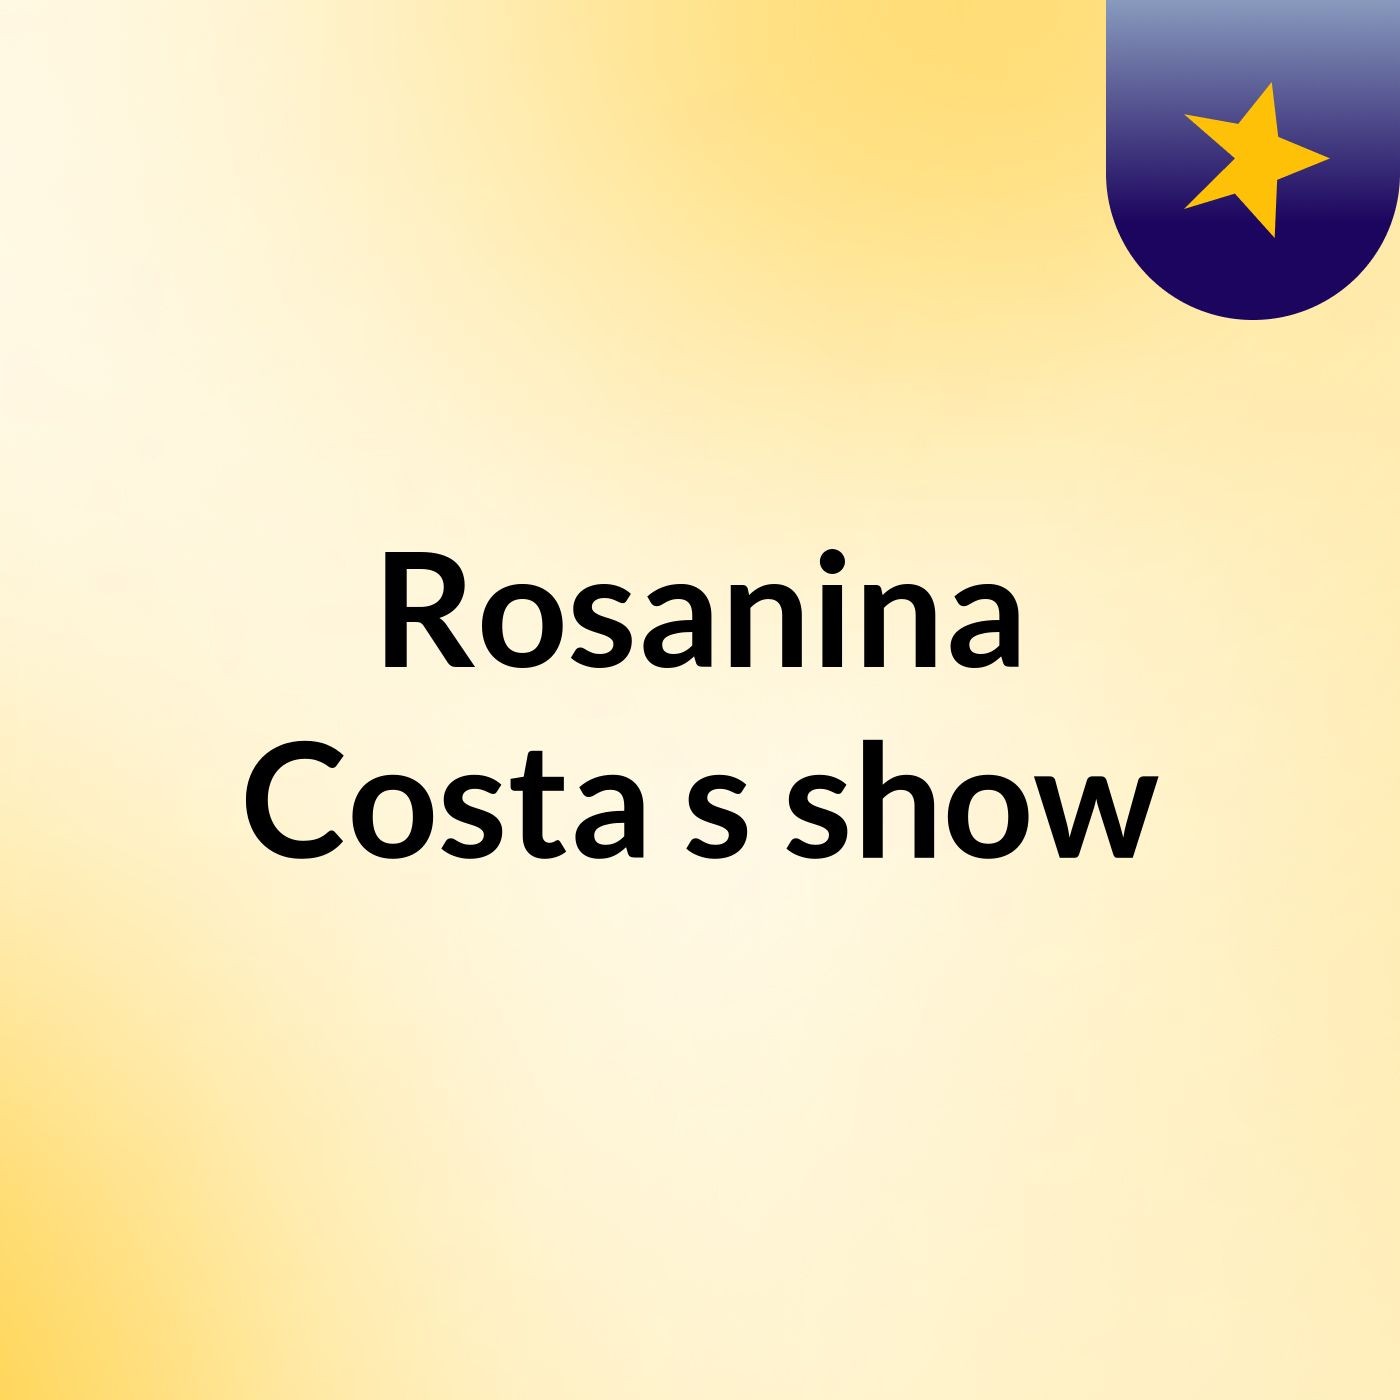 Rosanina Costa's show